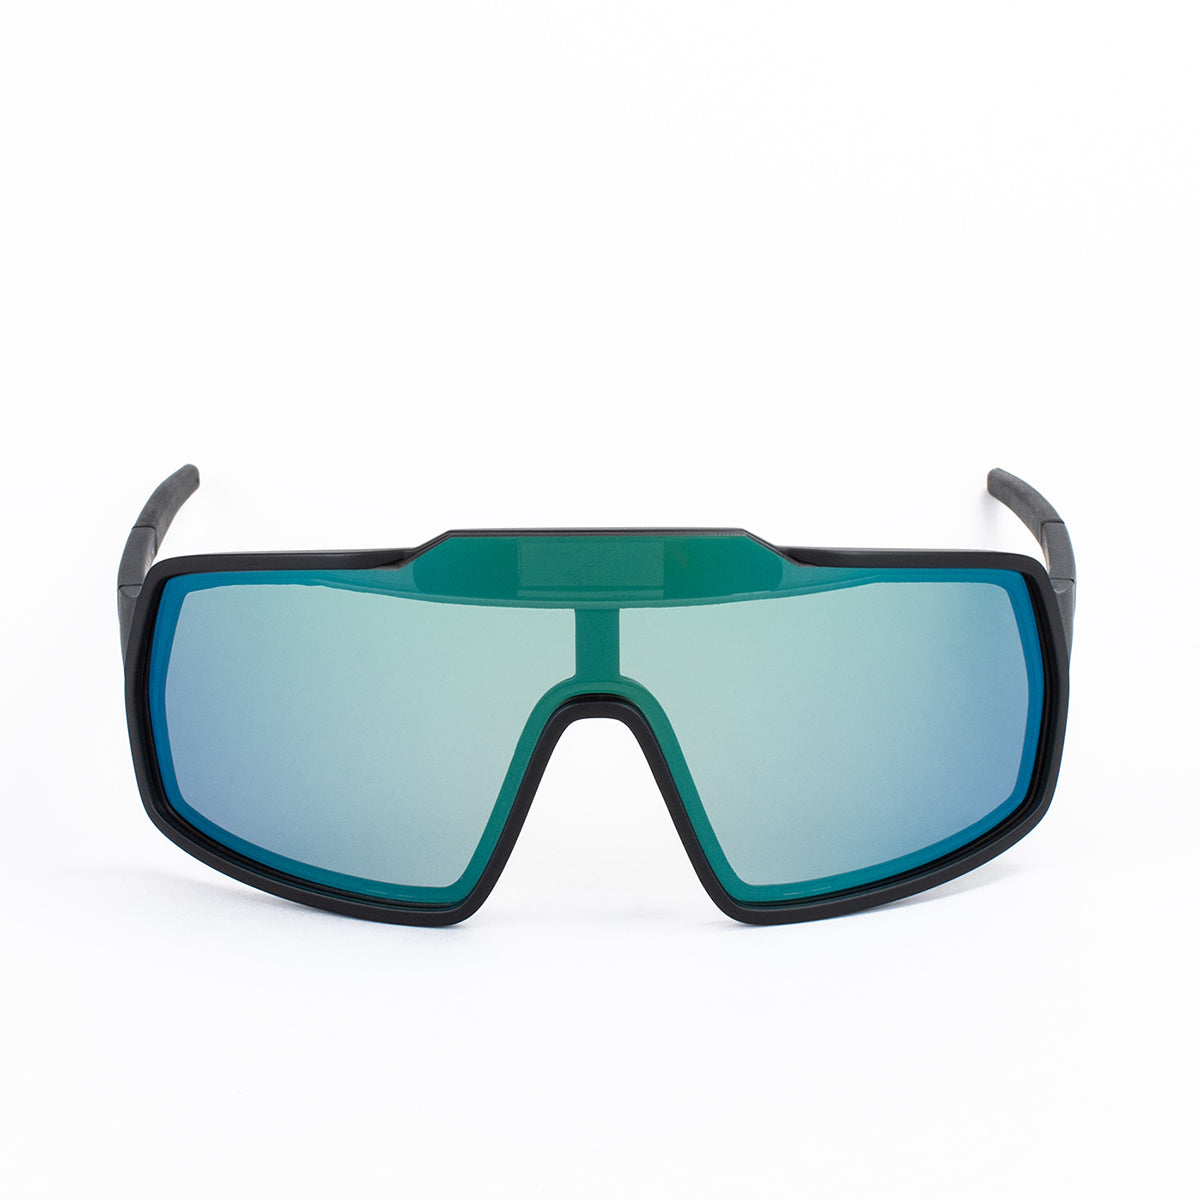 OutOf Electronic Sunglasses Bot 2 Irid Green